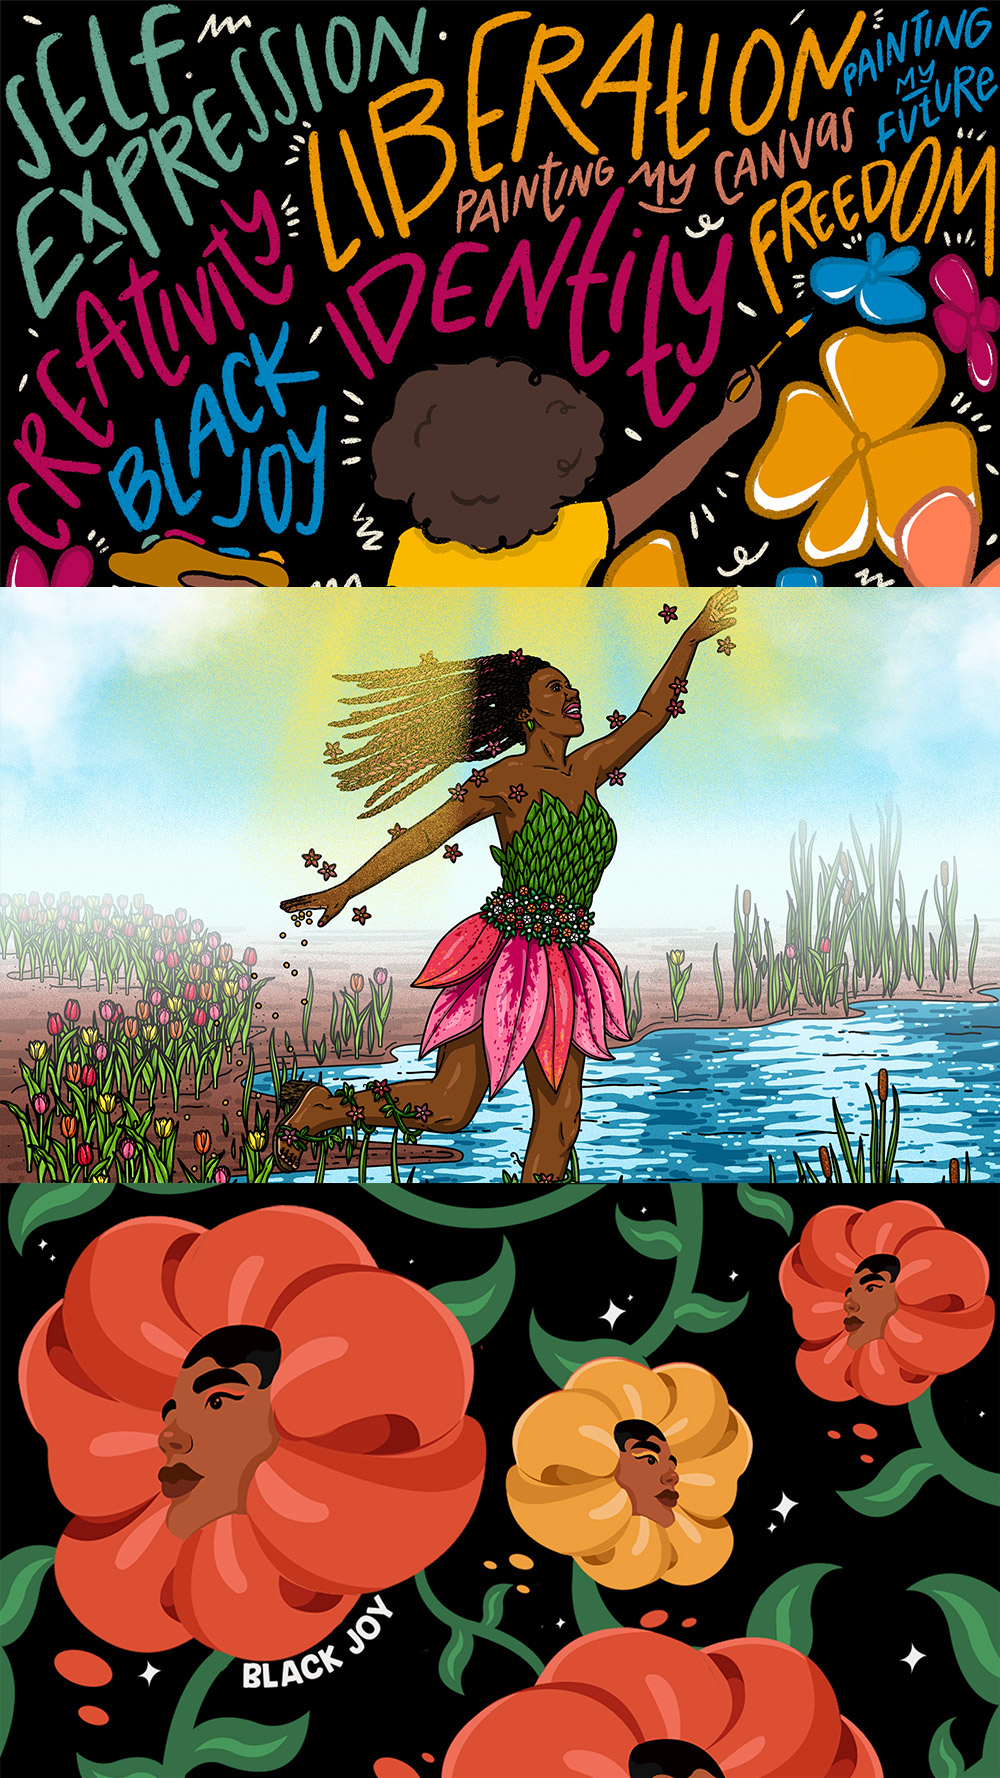 A combination of illustrations depicting Black joy.